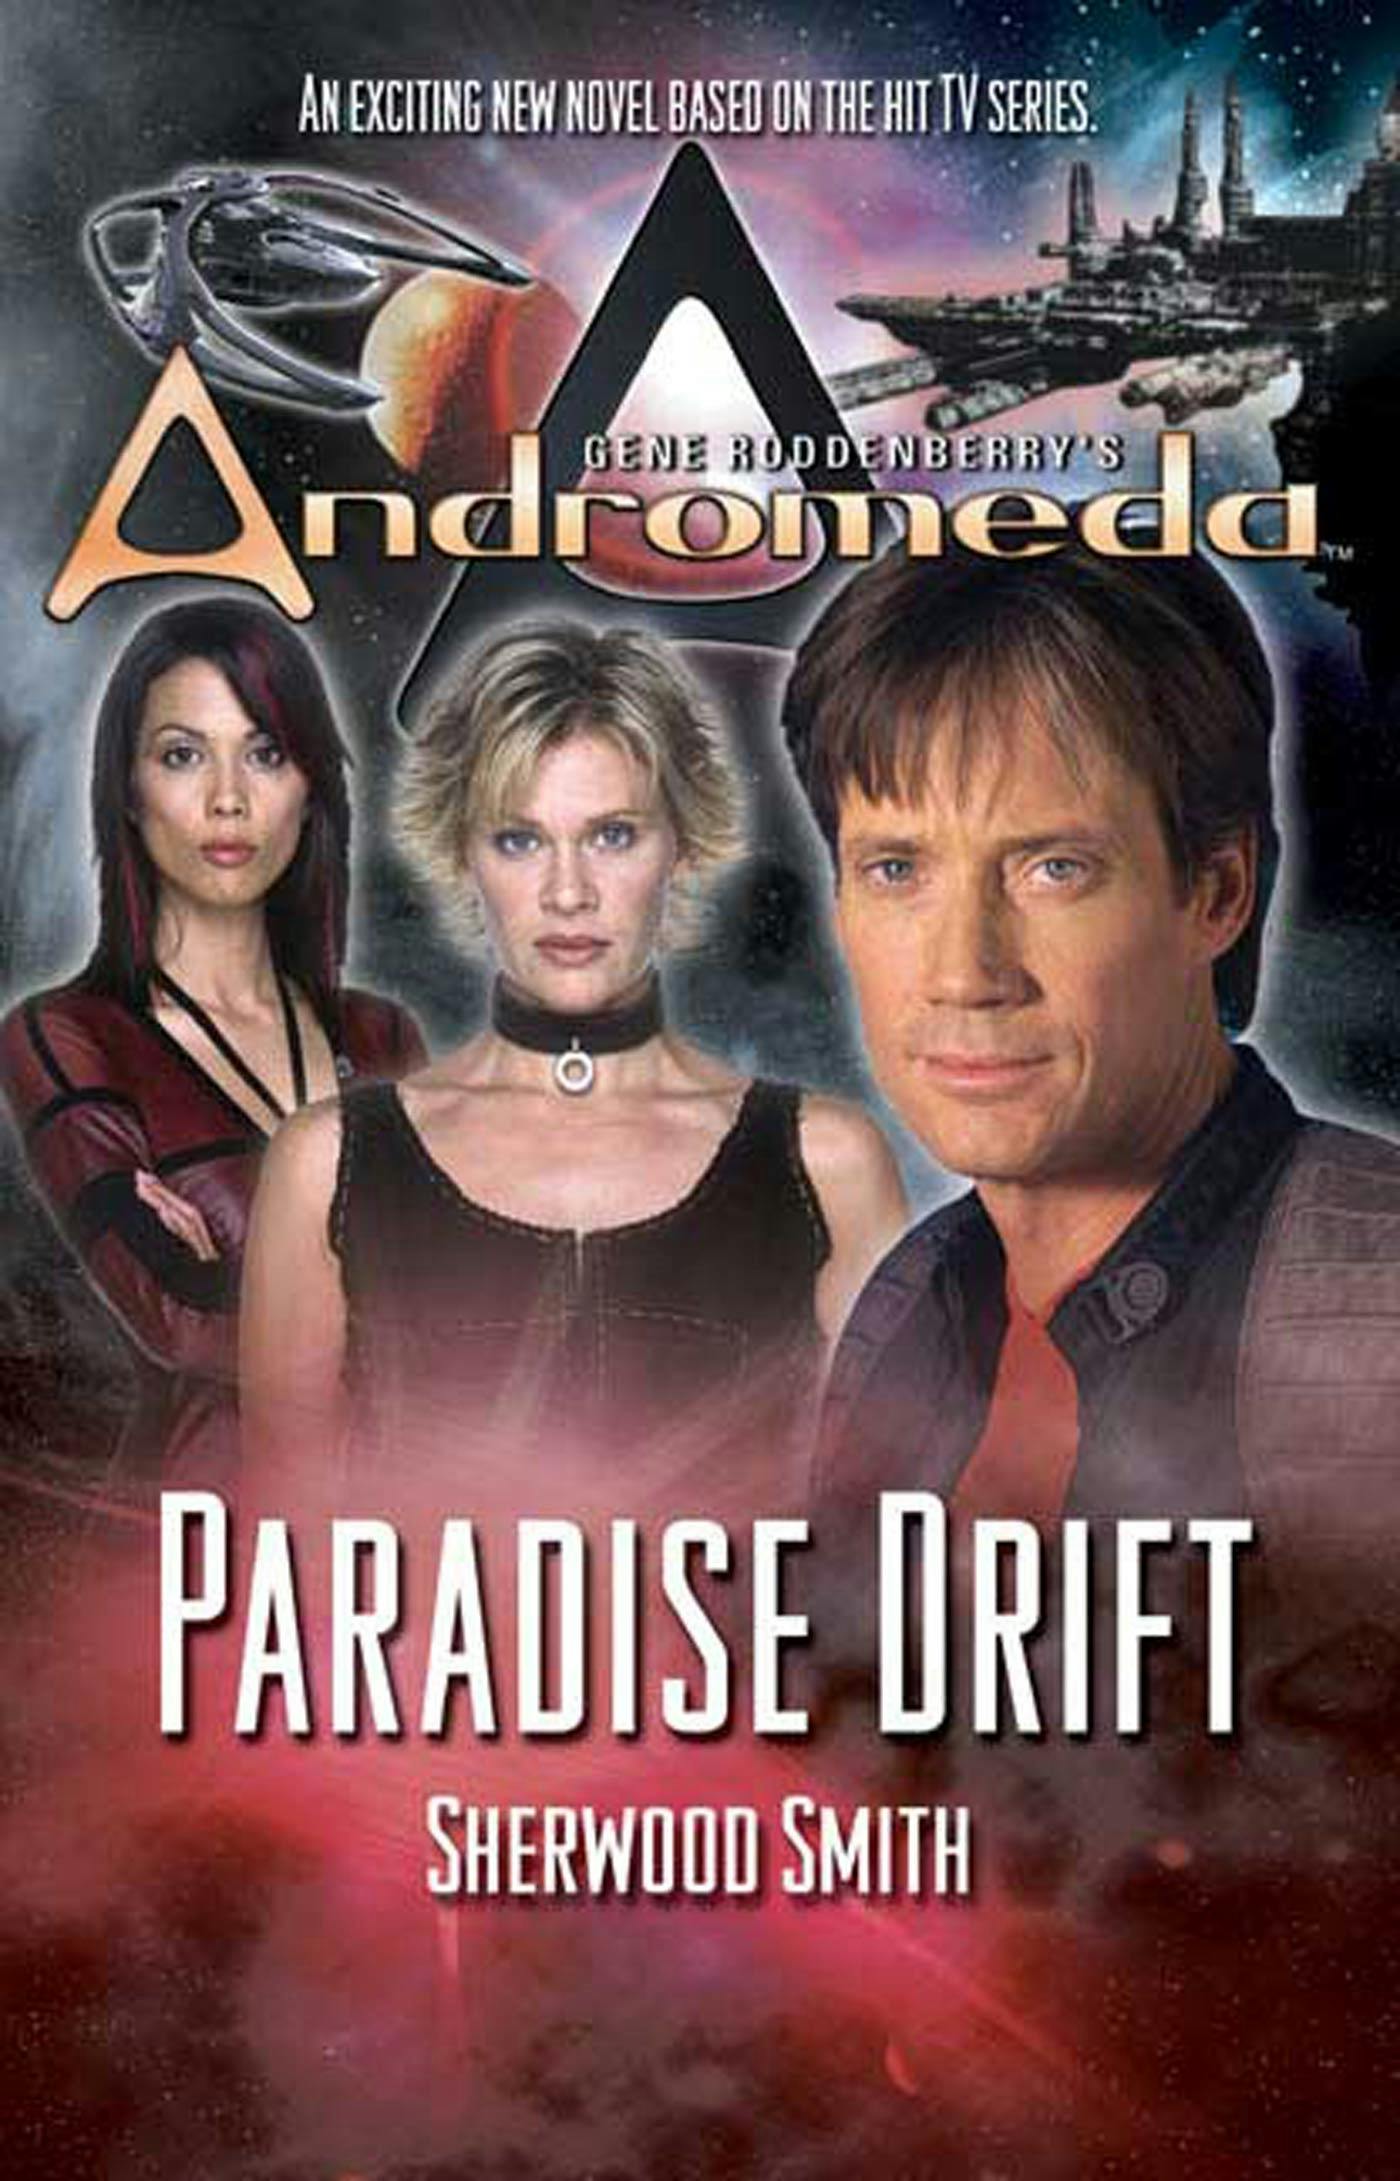 Cover for the book titled as: Gene Roddenberry's Andromeda: Paradise Drift